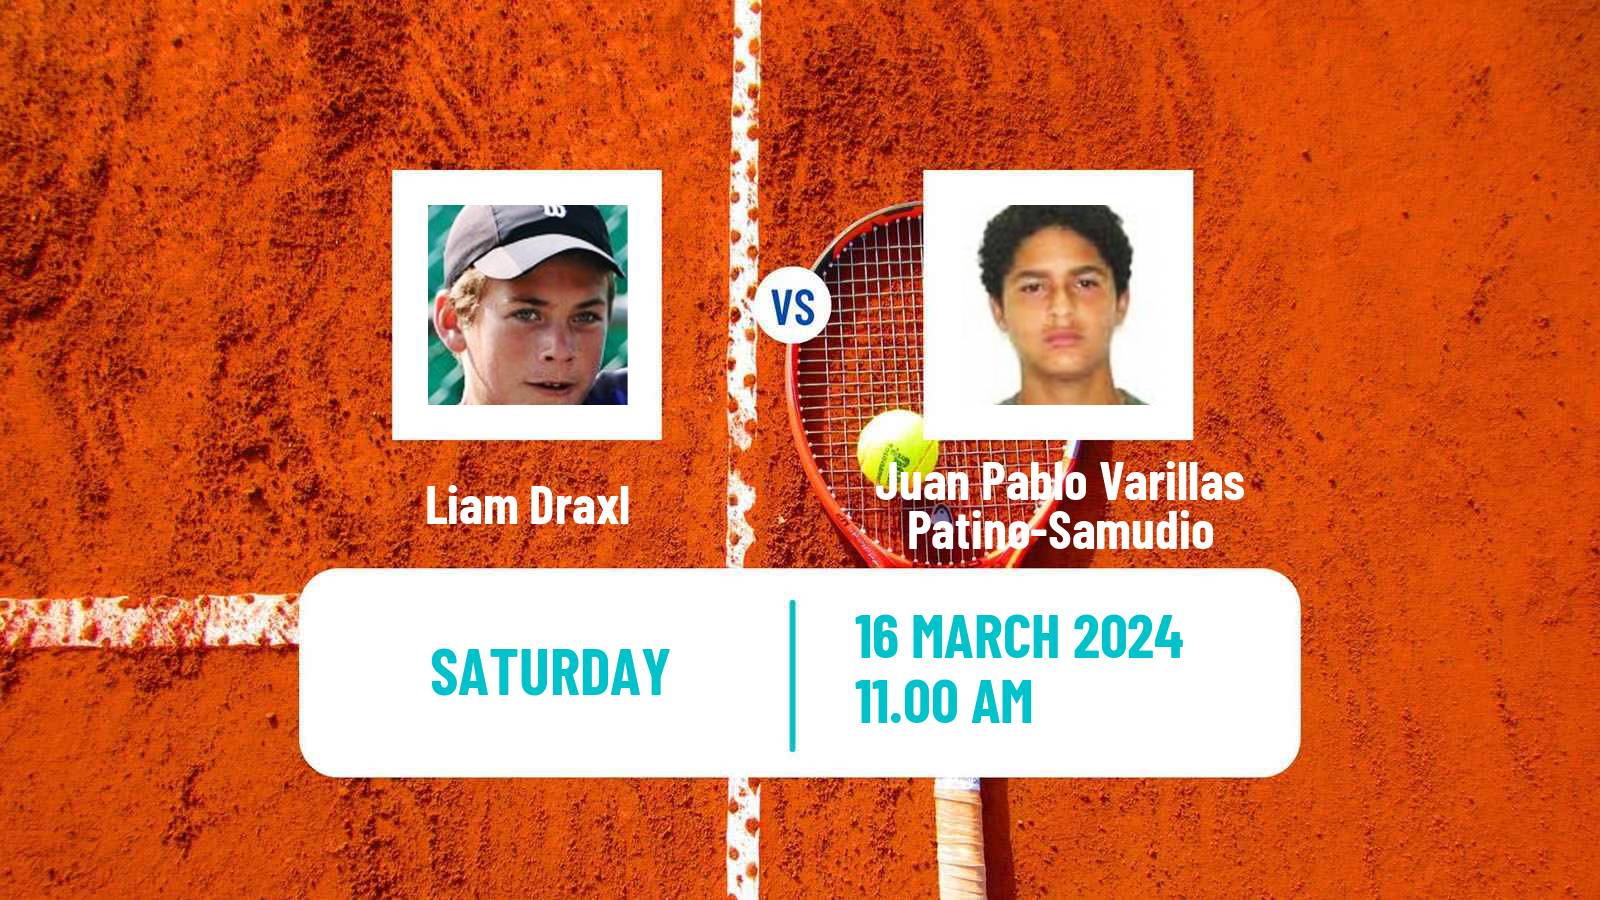 Tennis Santiago Challenger Men Liam Draxl - Juan Pablo Varillas Patino-Samudio